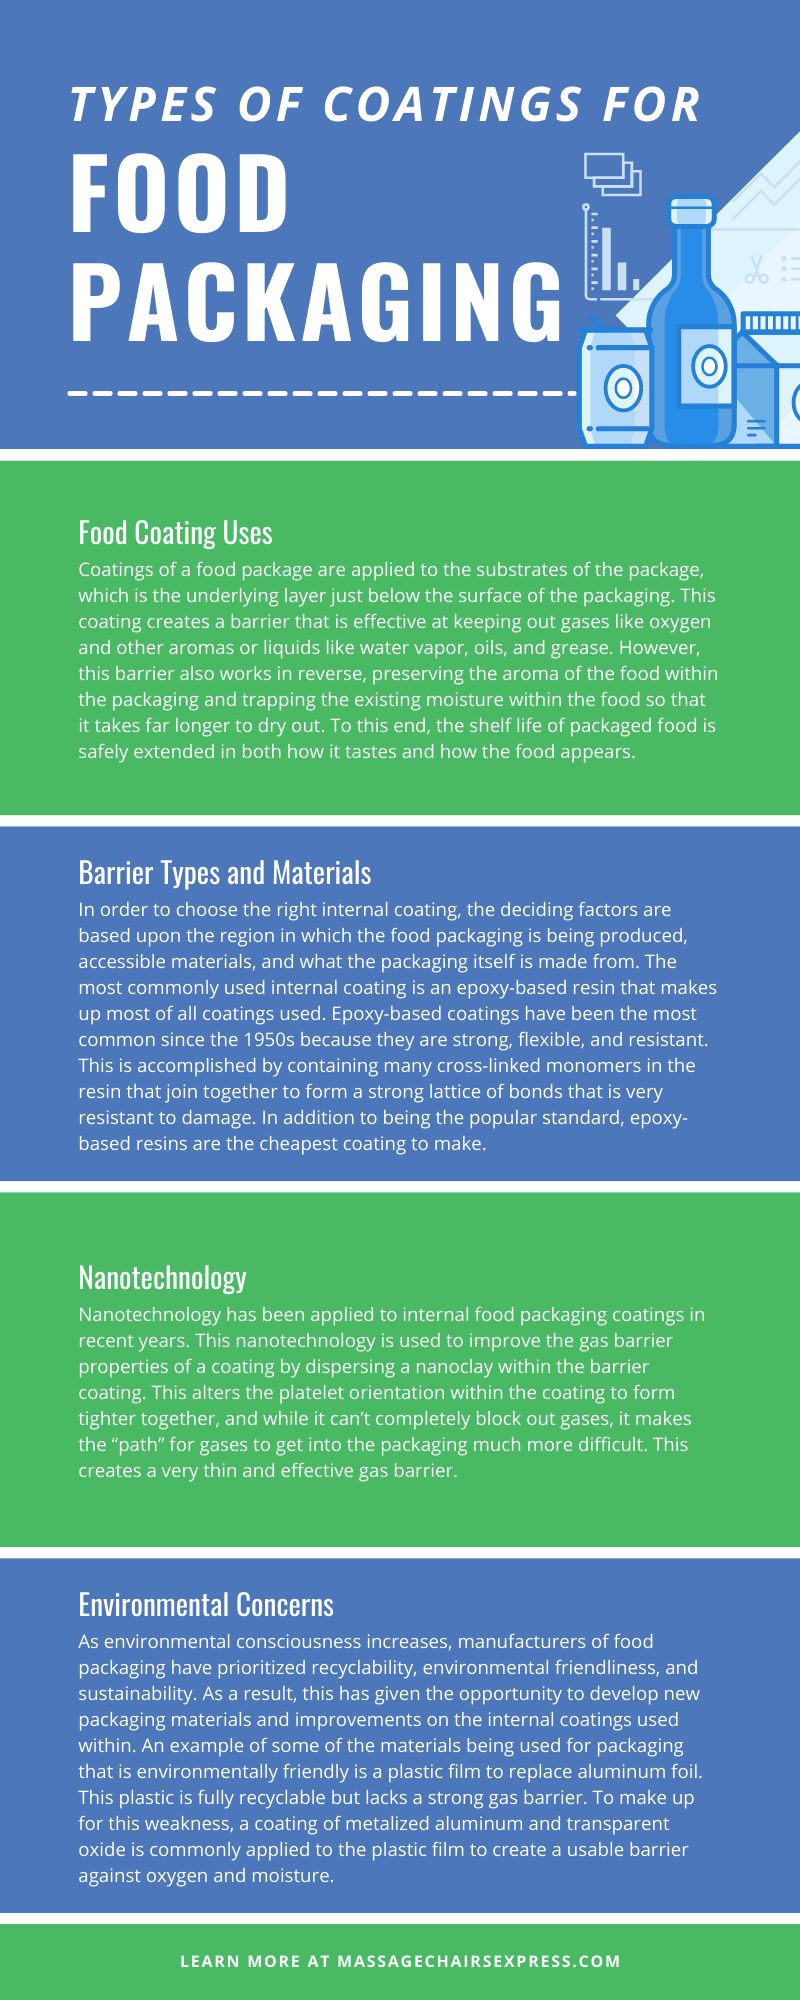 Types of Coatings for Food Packaging